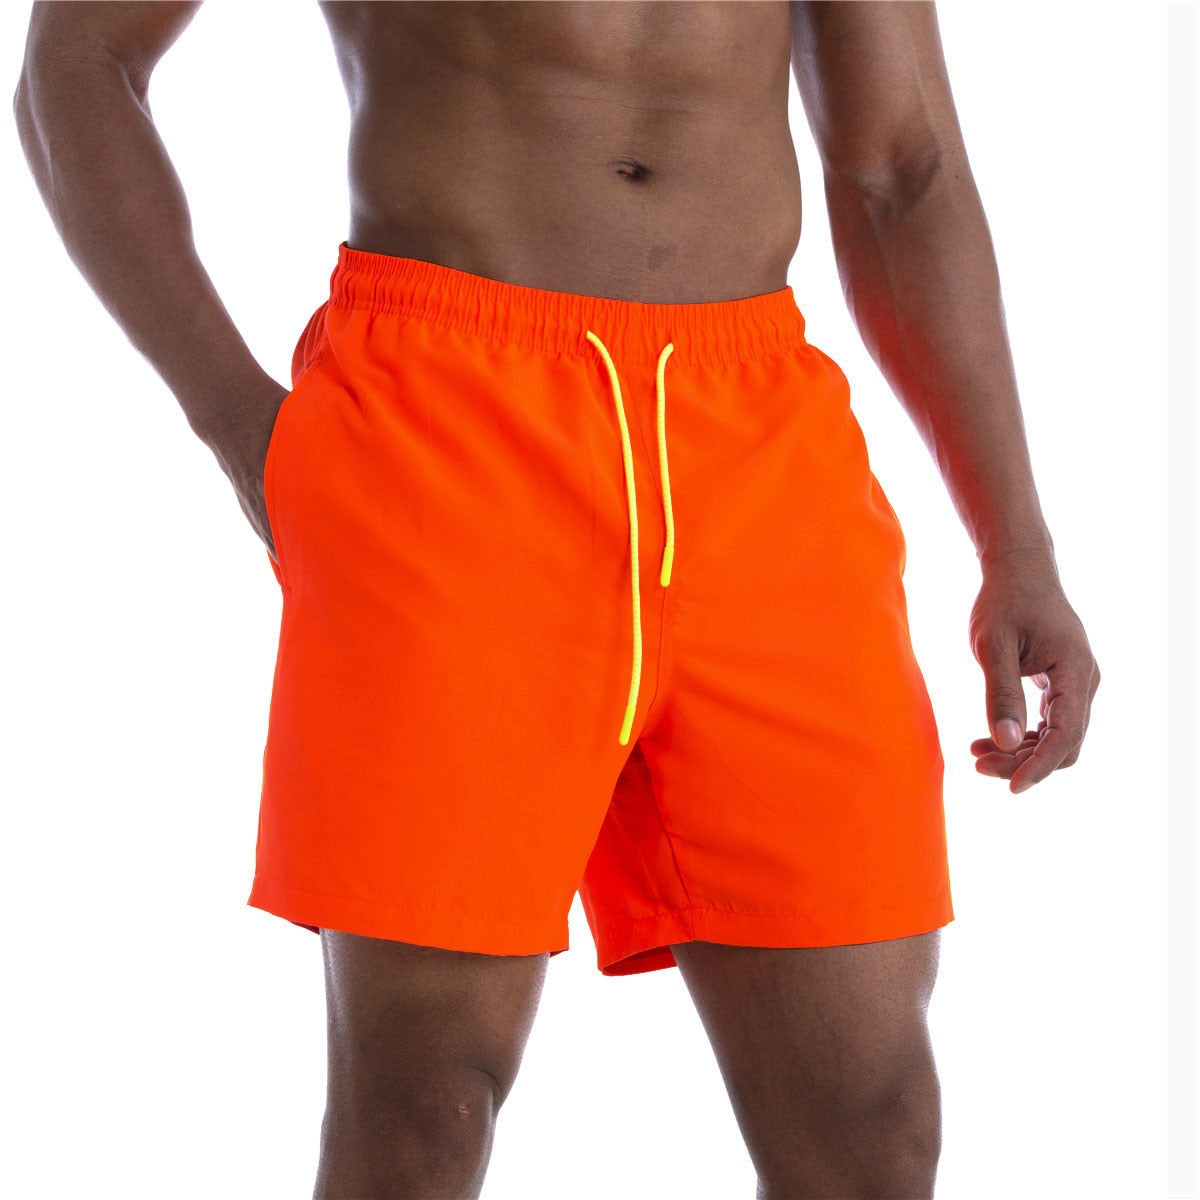 Buy orange02 Swimming Shorts for Men elastic waist and drawstring